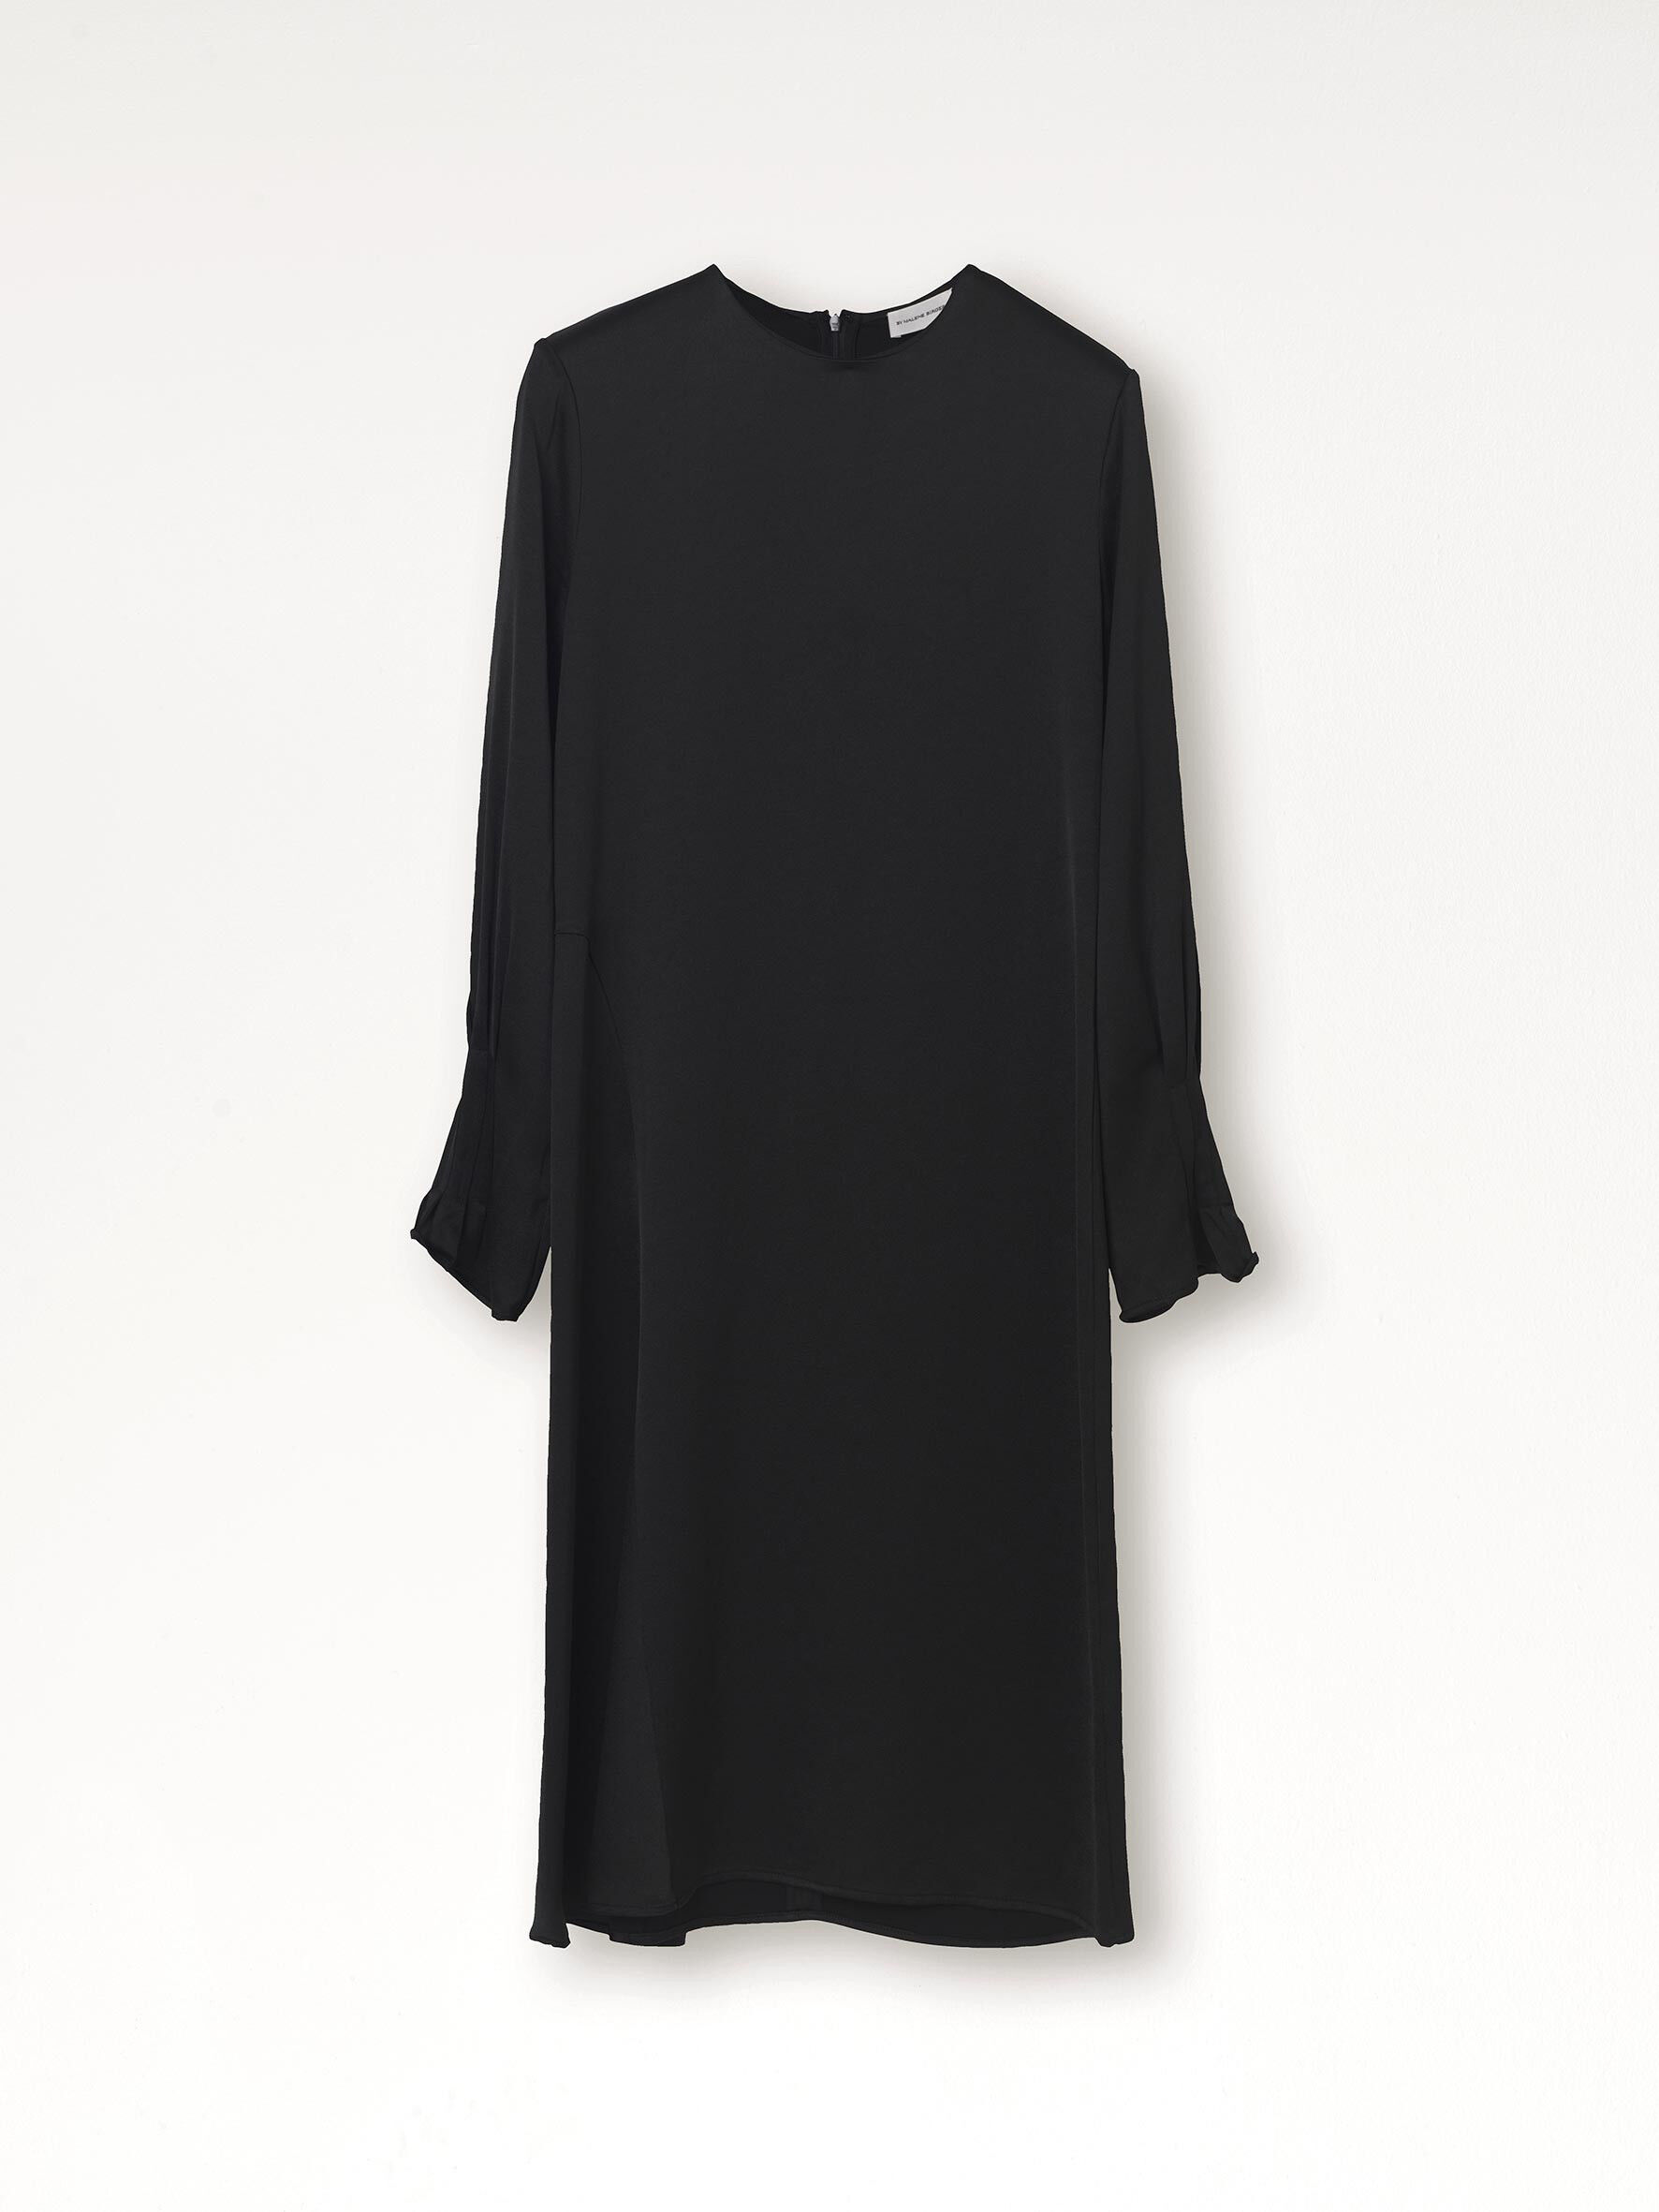 malene birger black dress